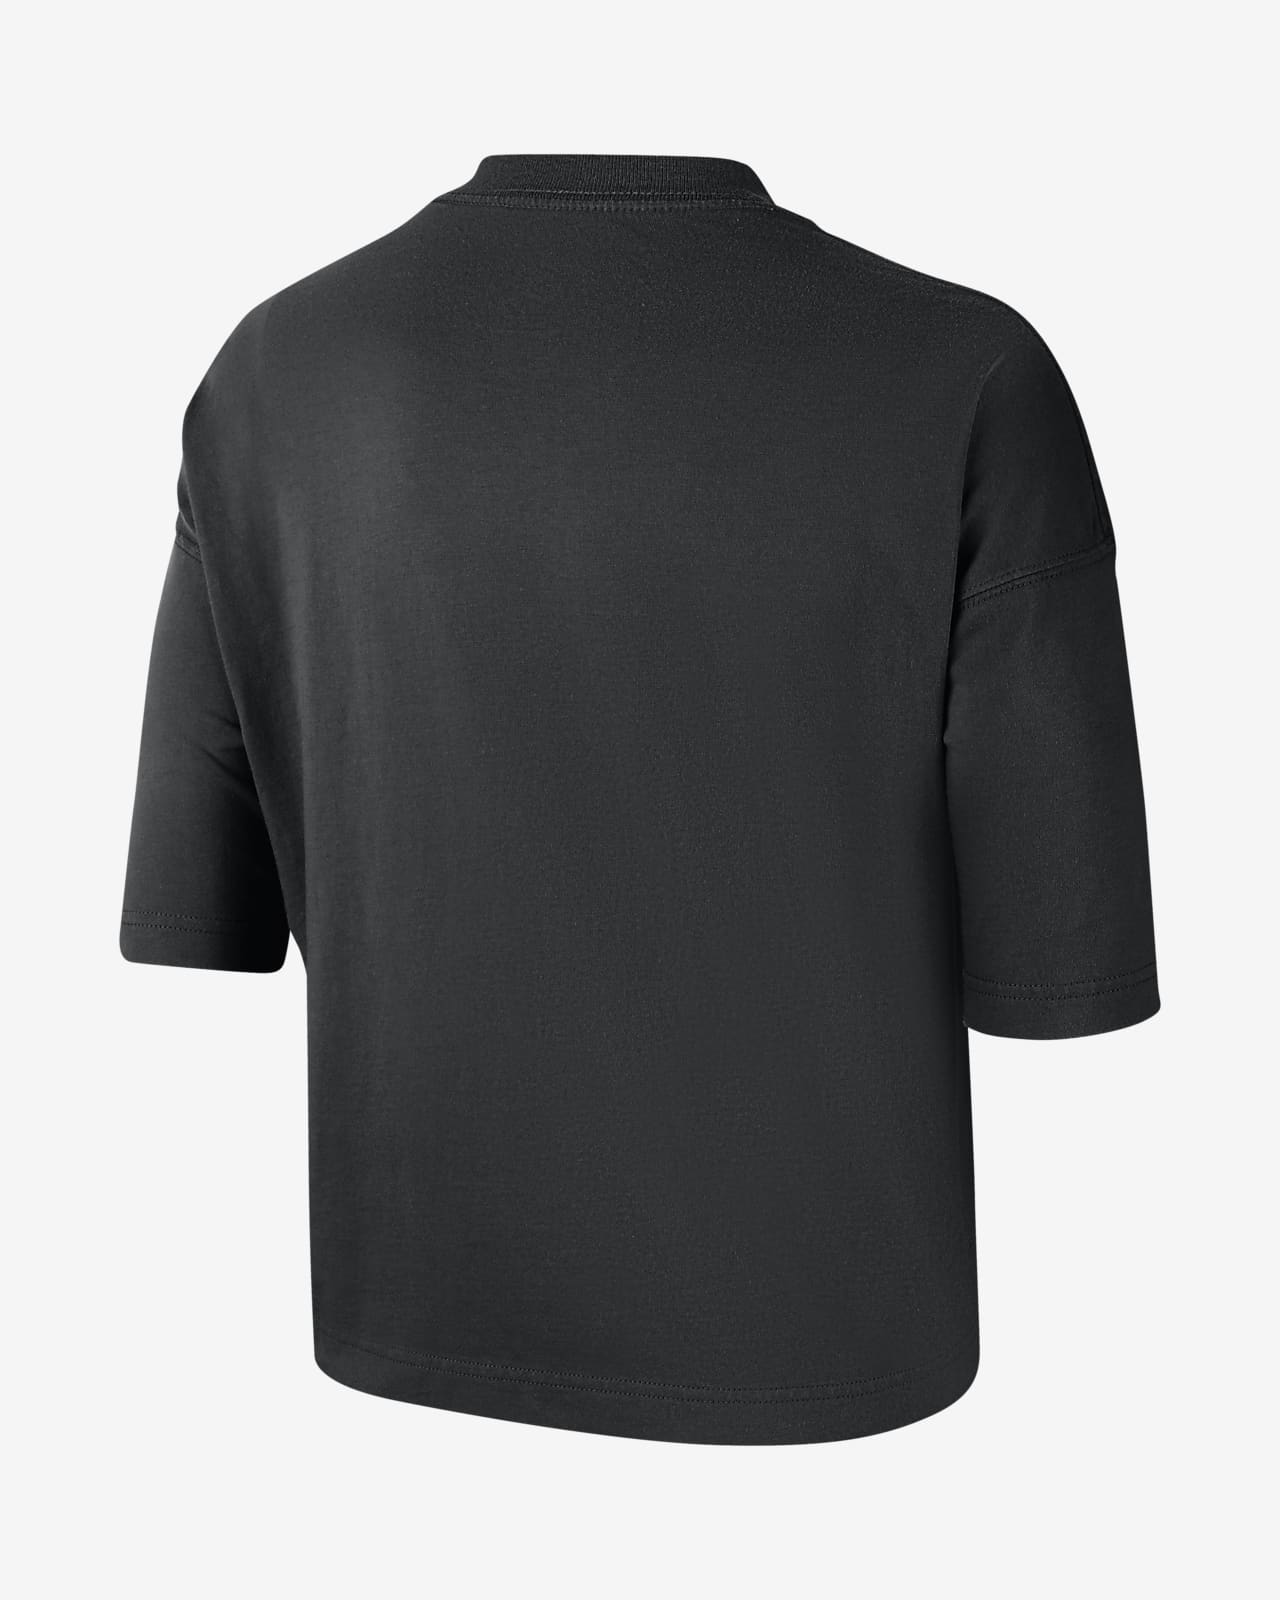 Milwaukee Bucks Courtside City Edition Nike Women's NBA T-Shirt in Black, Size: Large | DV6328-010